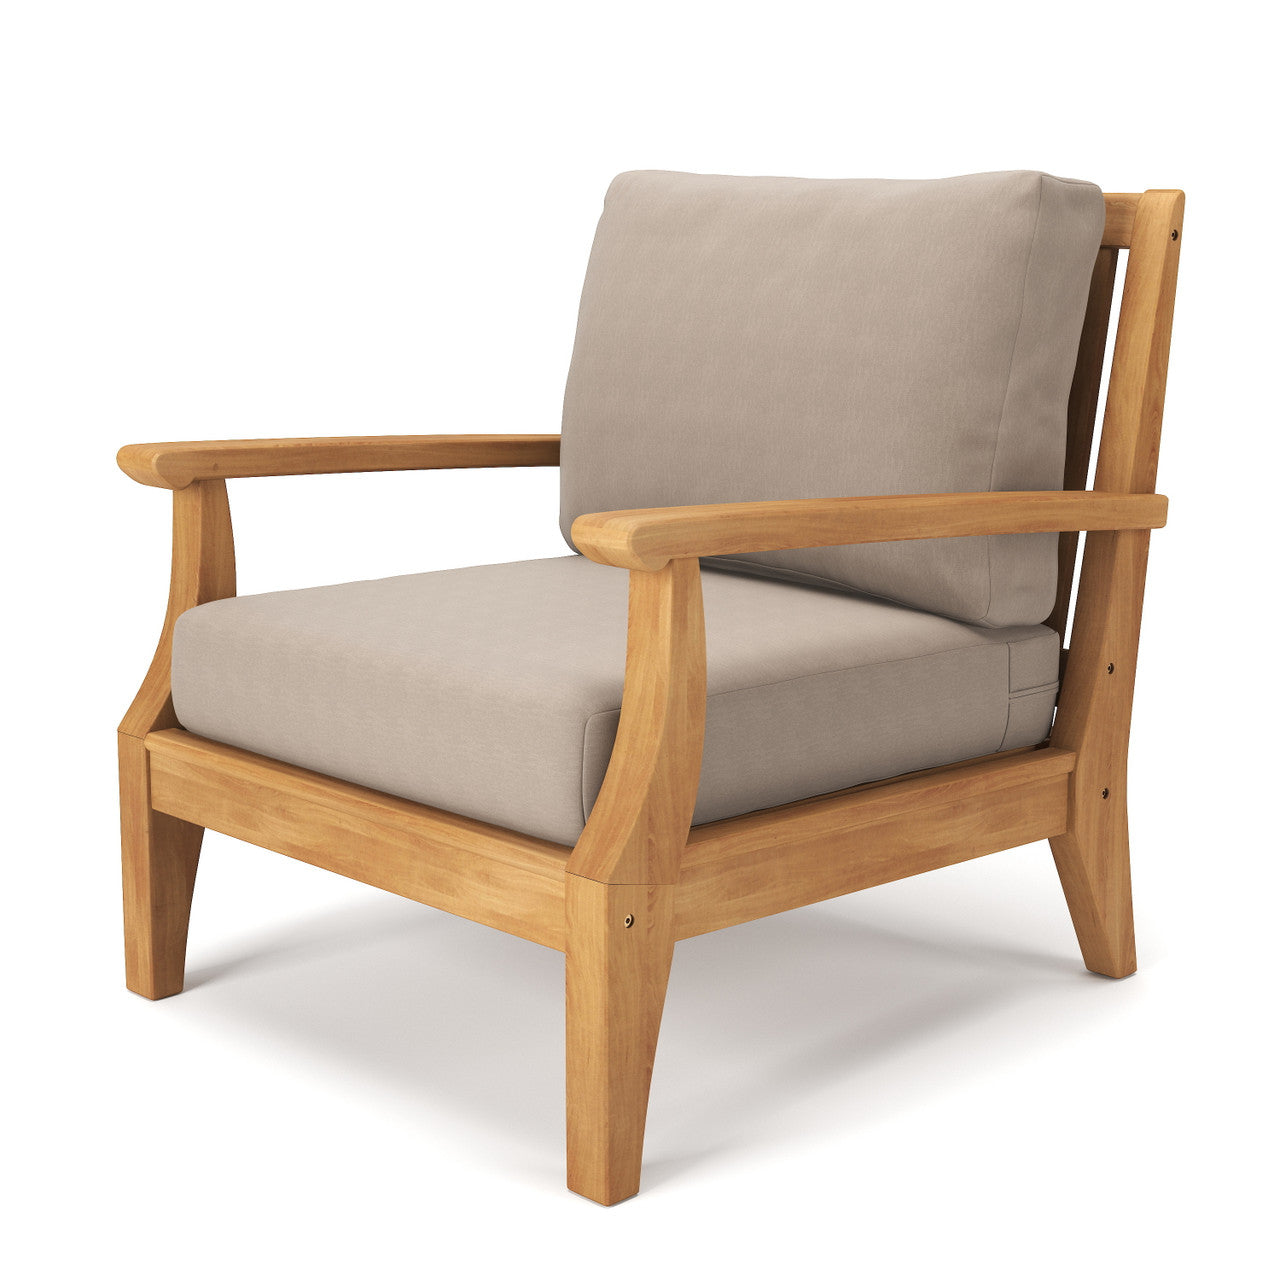 Forever Patio Miramar Plantation Teak Lounge Chair